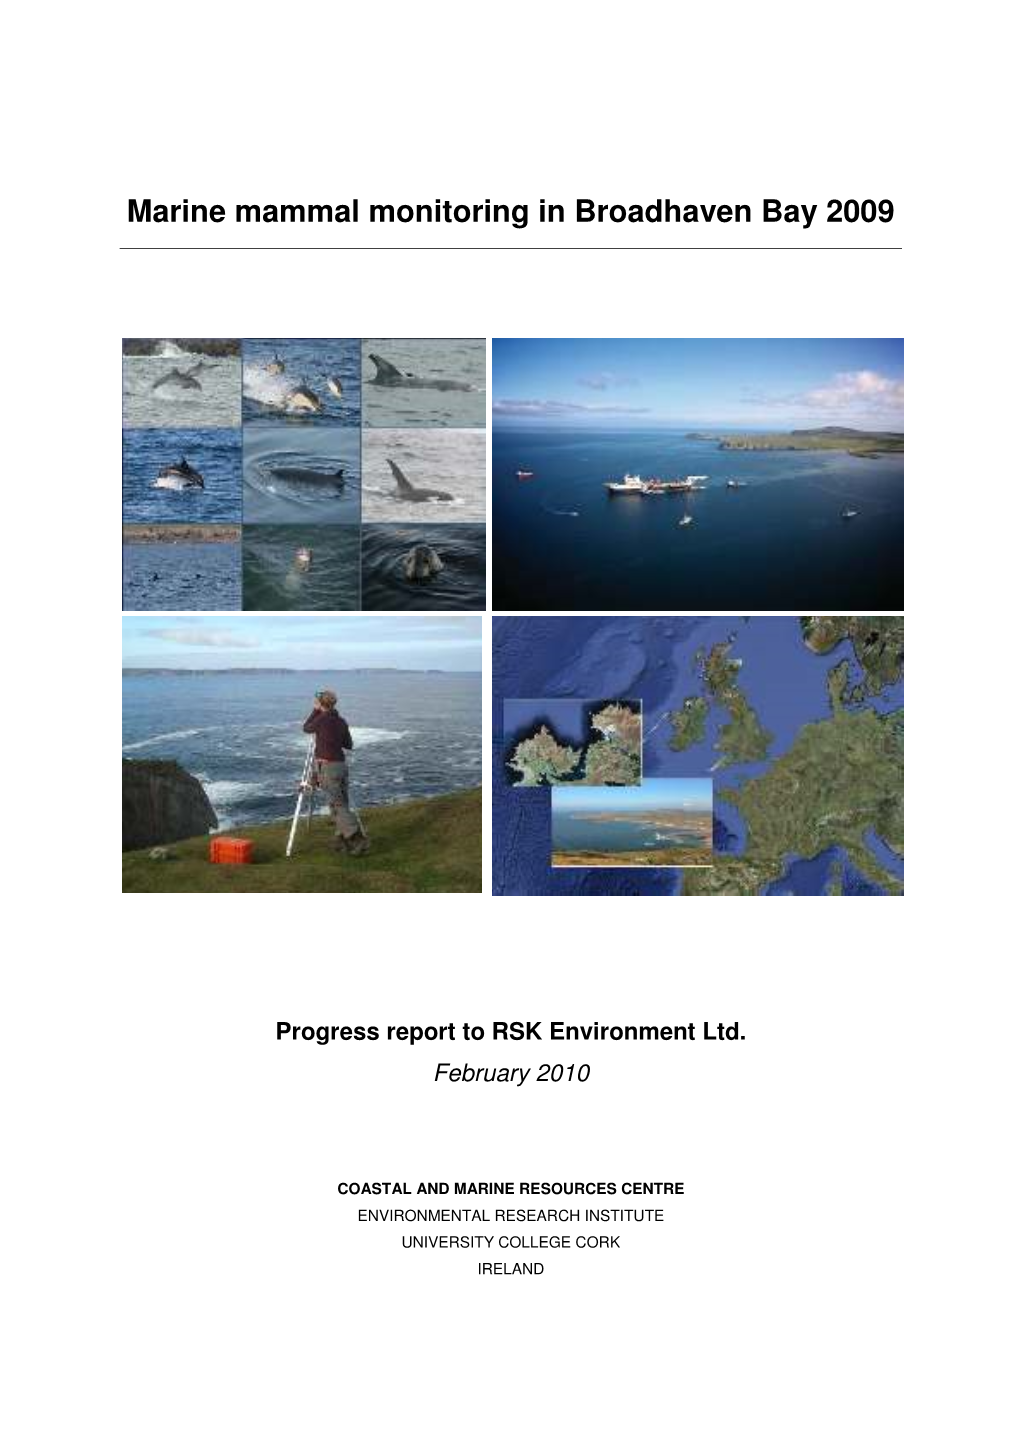 Marine Mammal Monitoring in Broadhaven Bay 2009